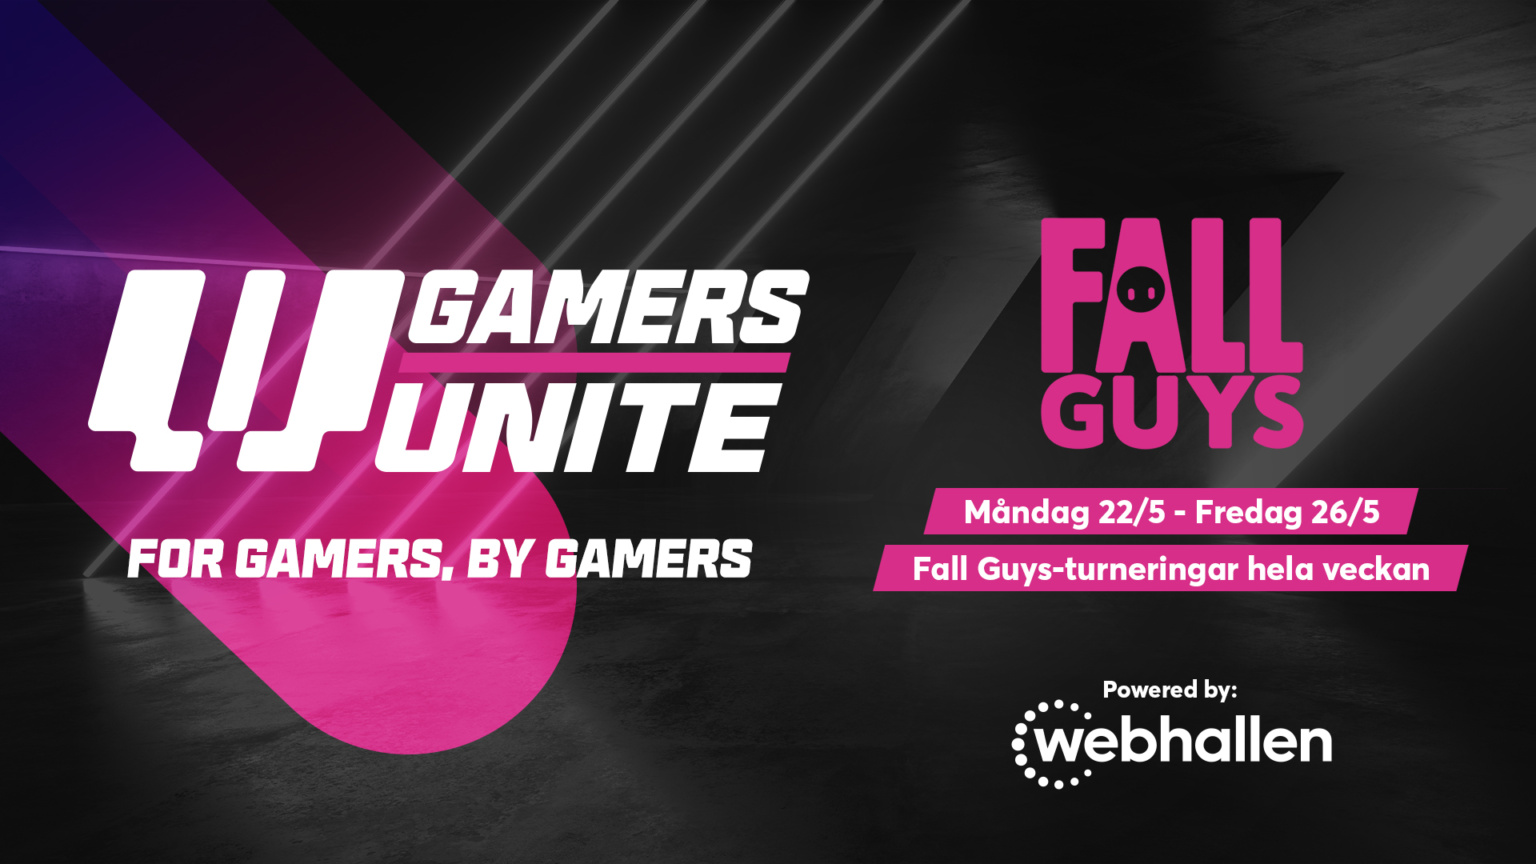 Gamers_Unite_Space_Turnering_Digital_Signage-1920x1080-Fall-Guys